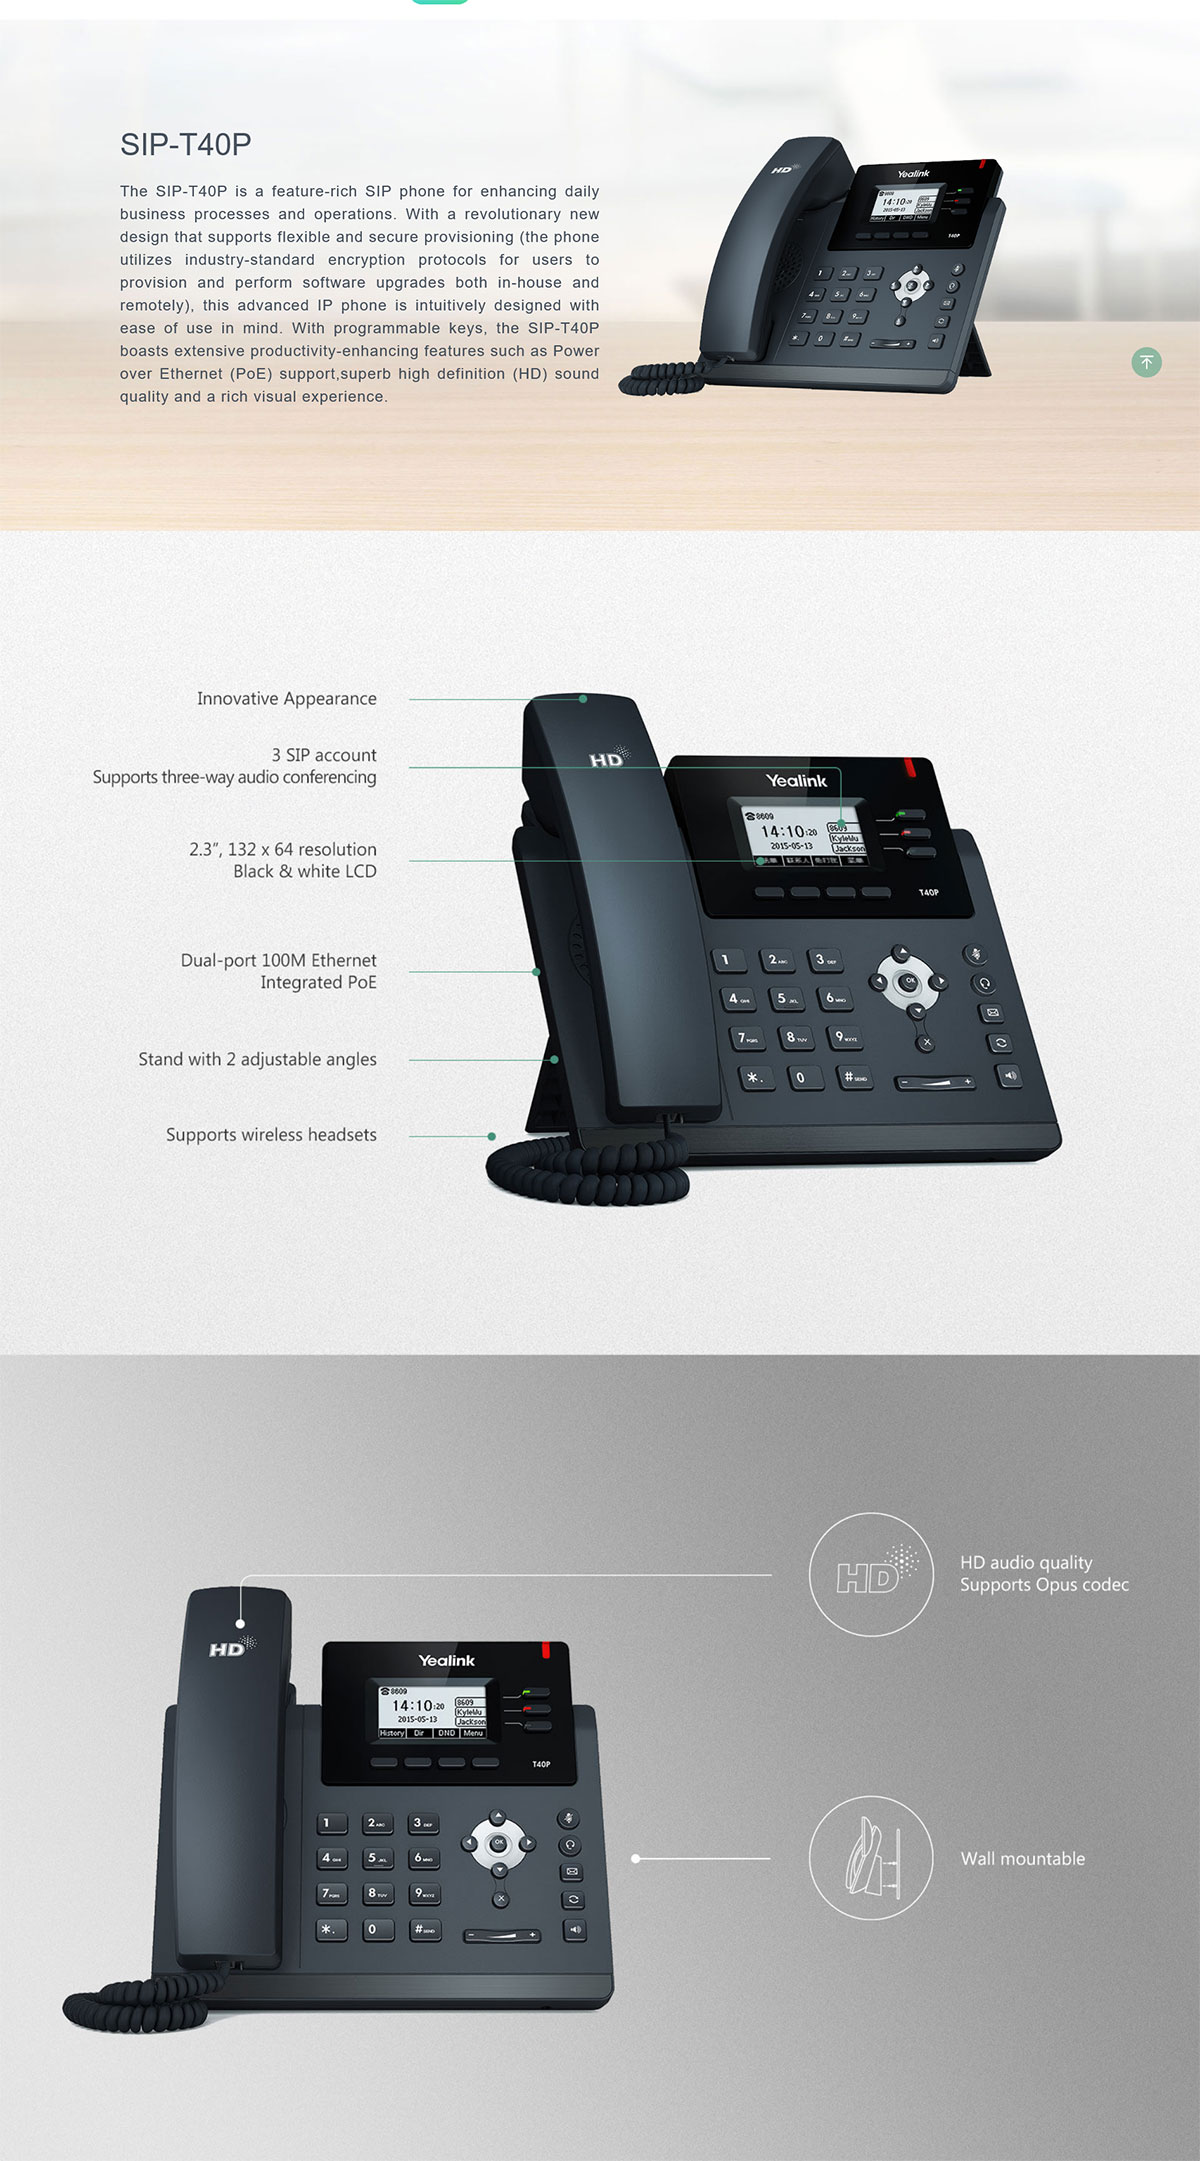 Yealink SIP-T40P 3 Line LCD IP Phone Details